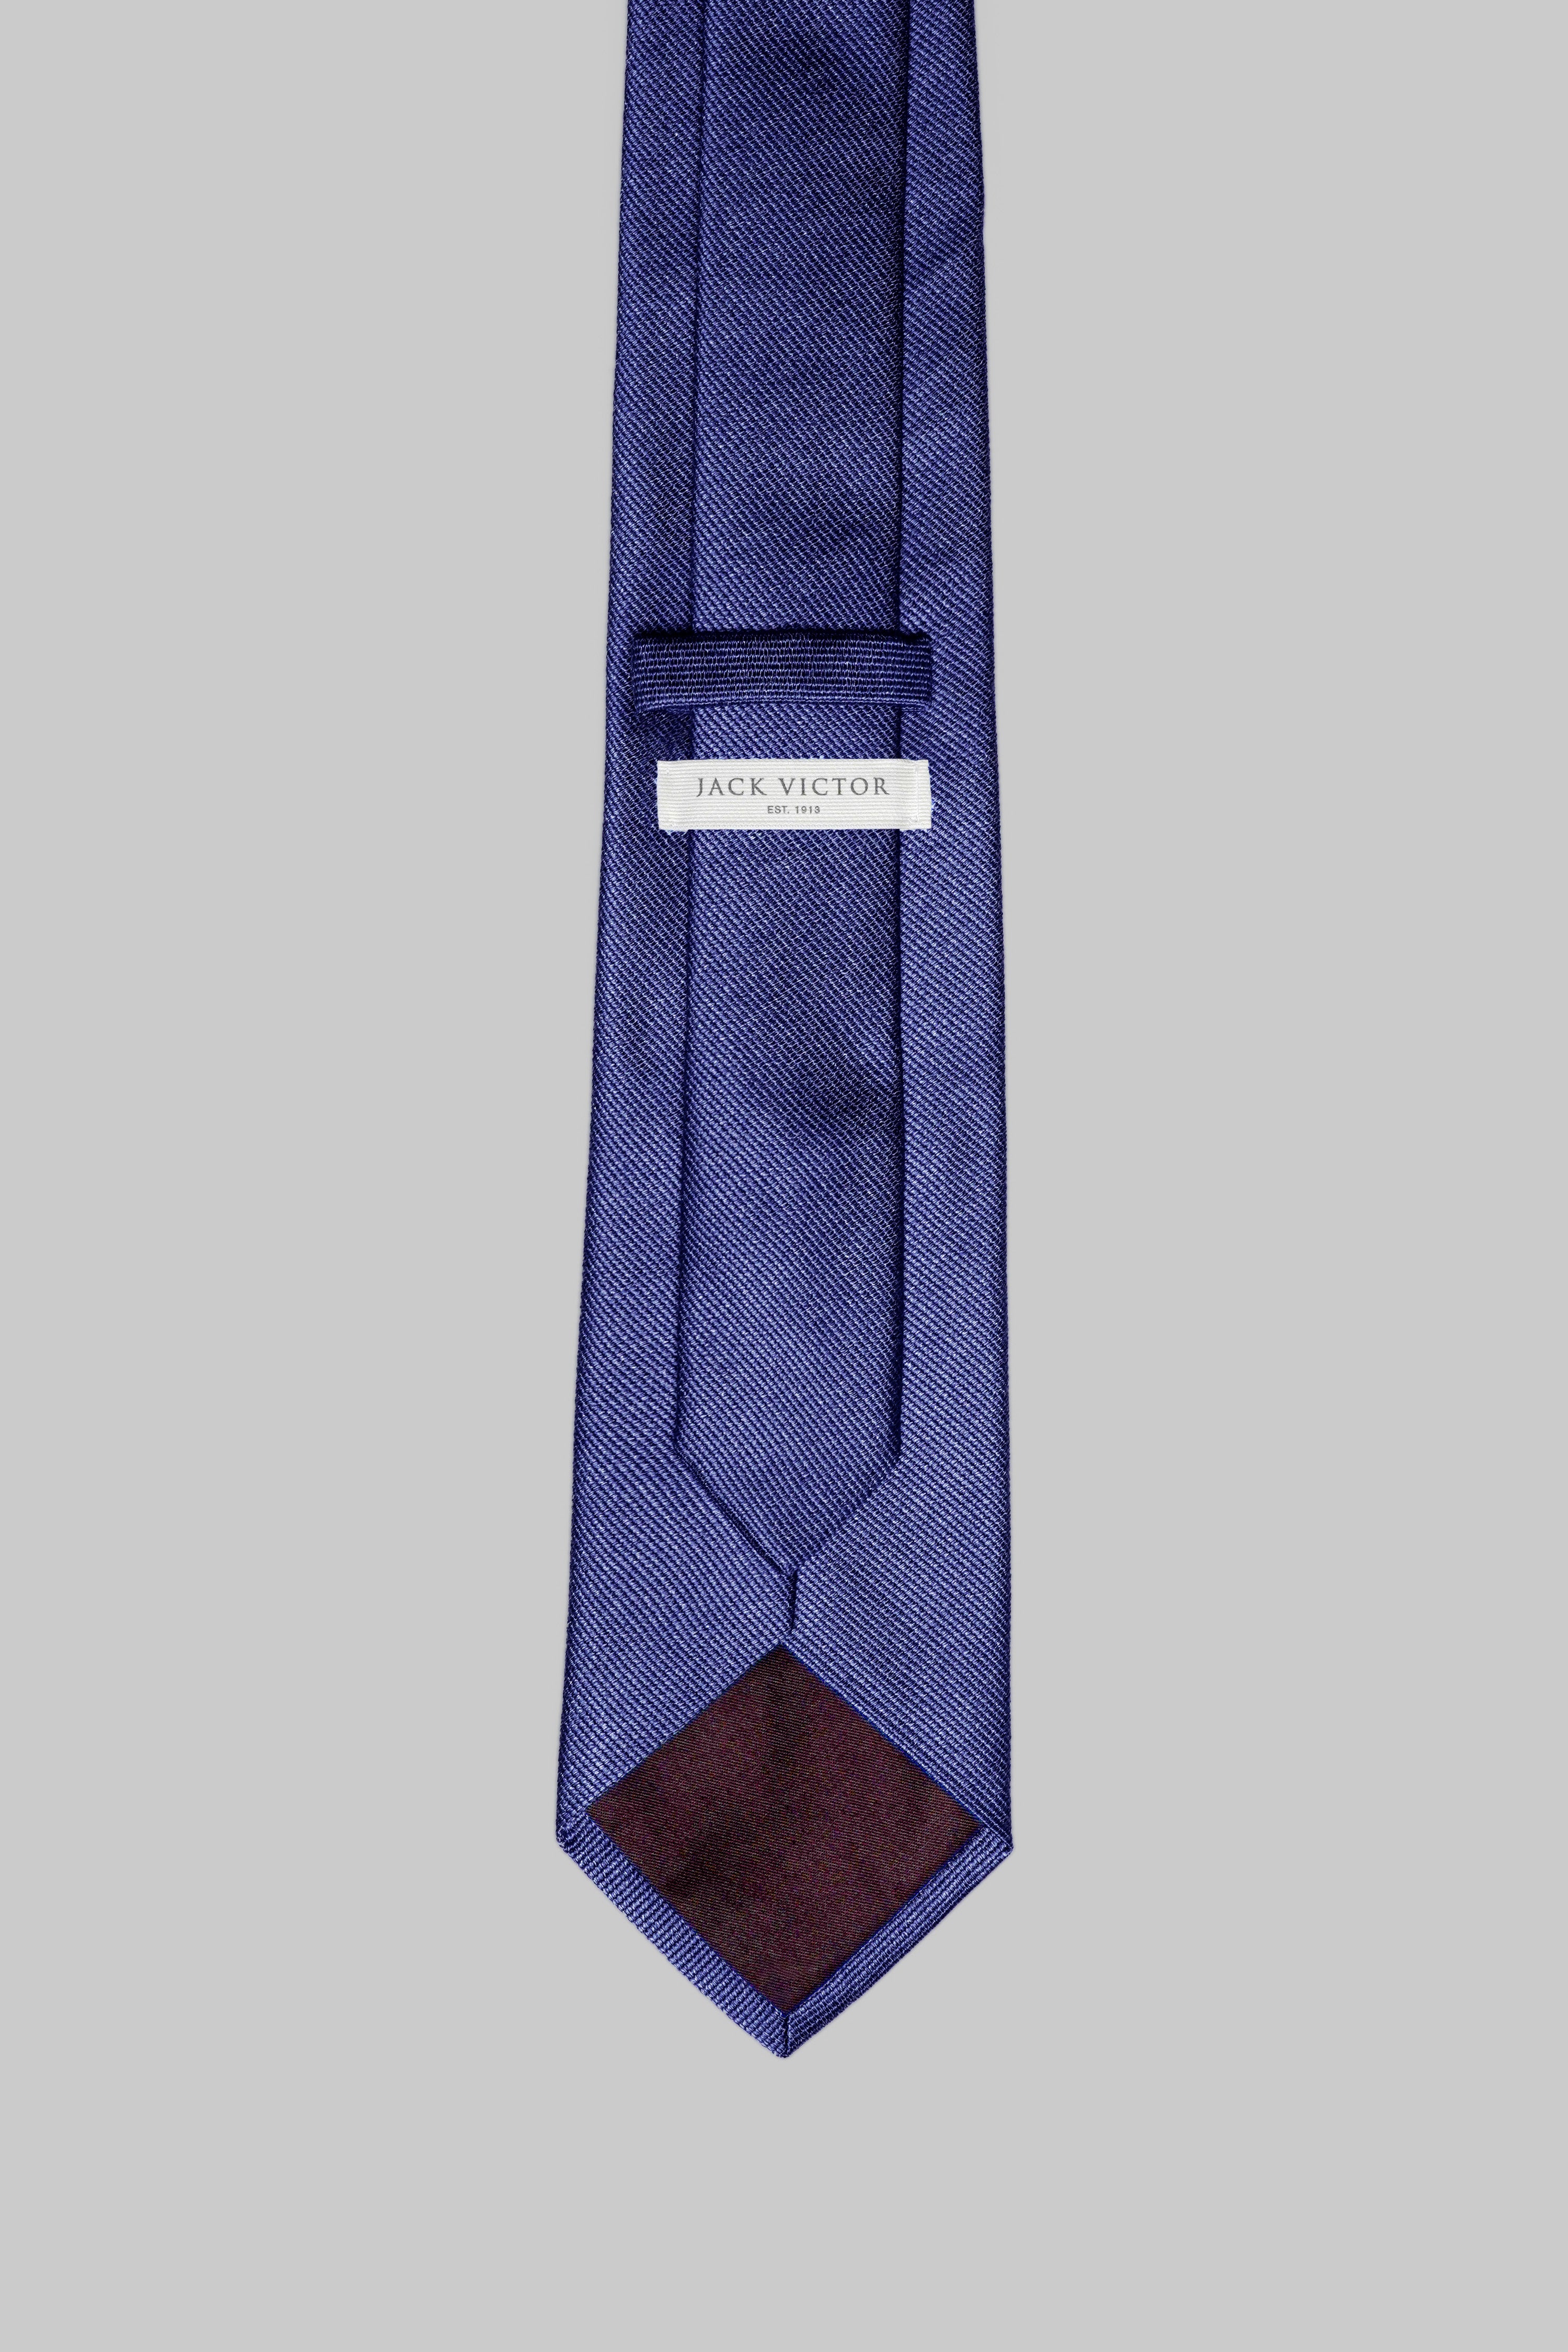 Vue alternative 2 Bowman cravate tissée unie en bleu denim